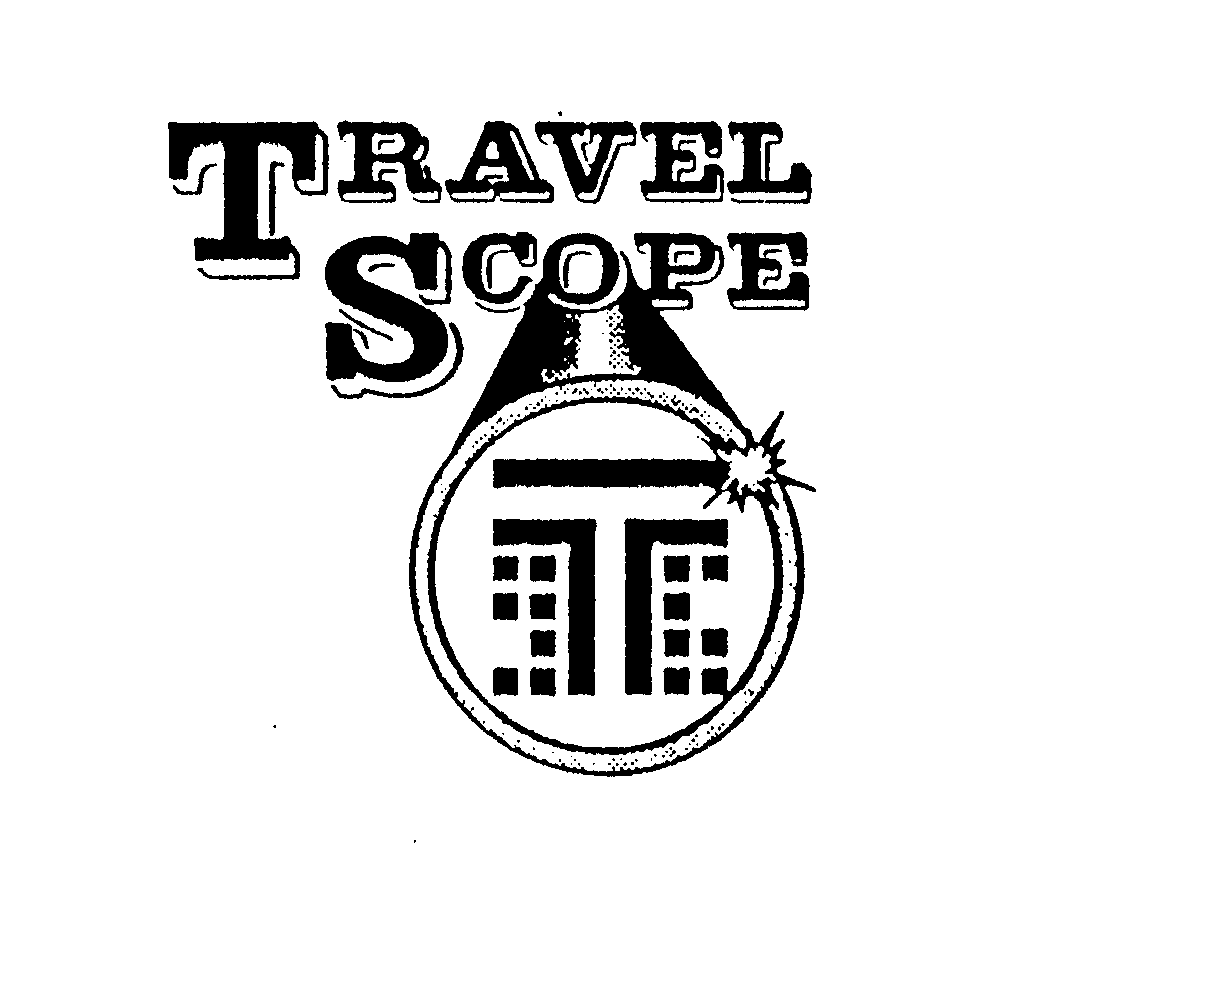 Trademark Logo TRAVEL SCOPE